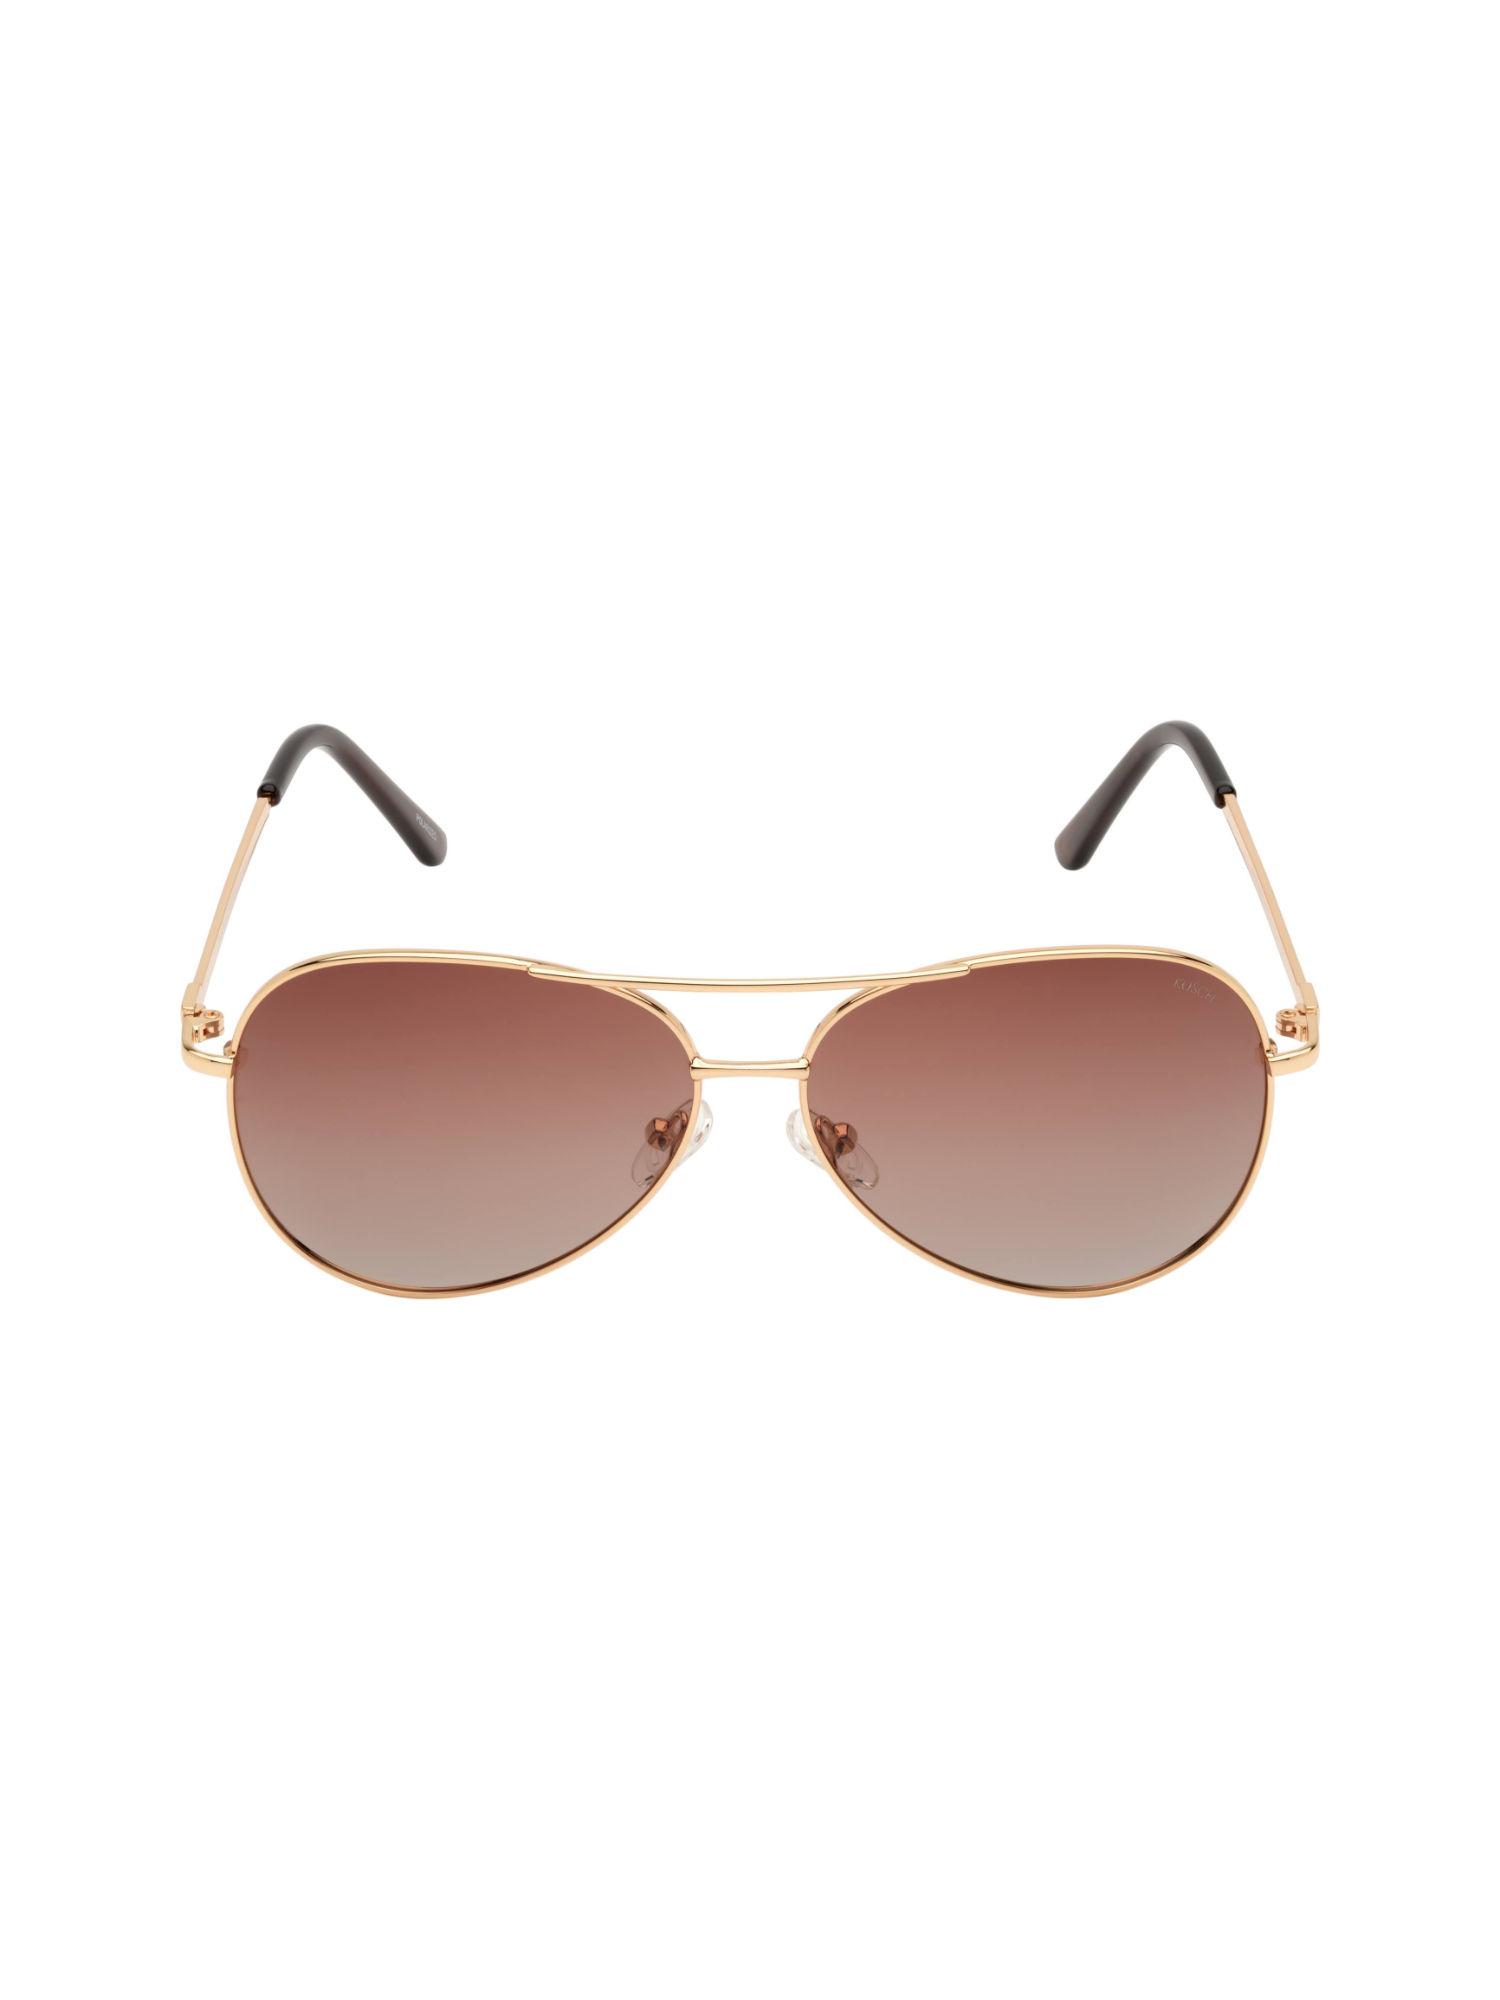 brown - aviator shape sunglasses - kst 22823